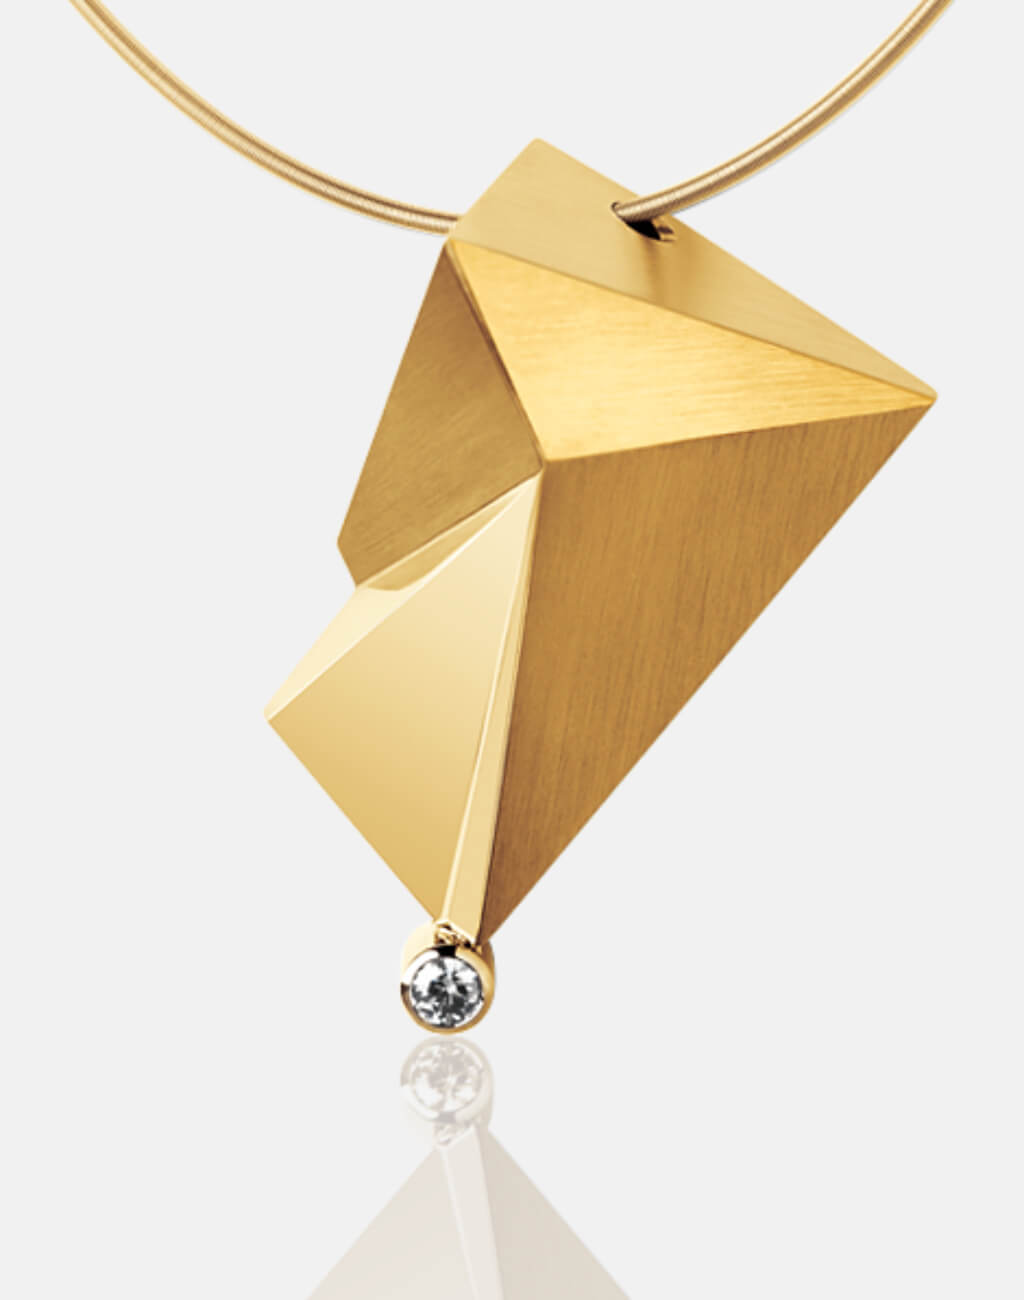 Cyllene | Collier, Kette, Kettenanhänger - 750 Gelbgold, Diamant-Brillant | necklace, pendant - 18kt yellow-gold, diamonds | SYNO-Schmuck.com